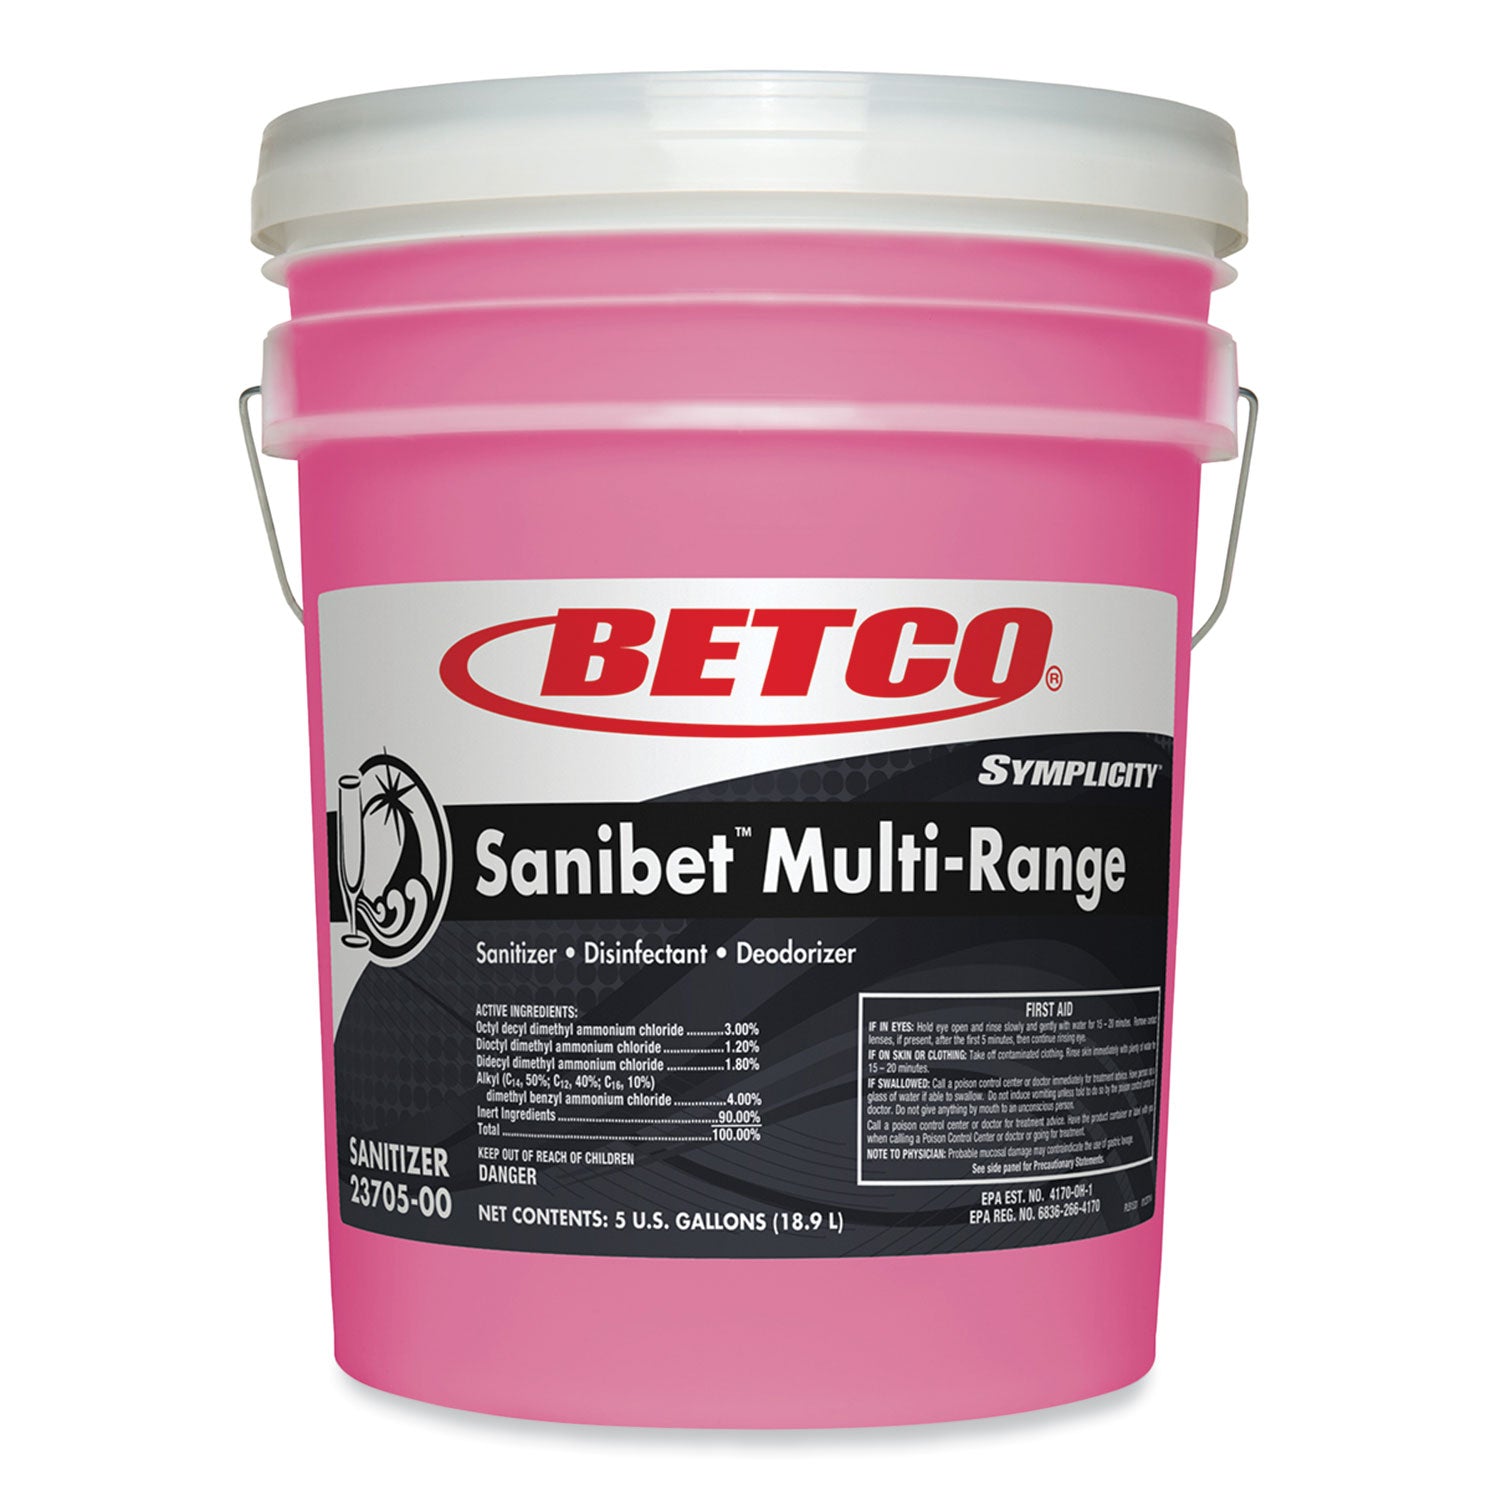 symplicity-sanibet-multi-range-sanitizer-disinfectant-deodorizer-5-gal-pail_bet2370500 - 1